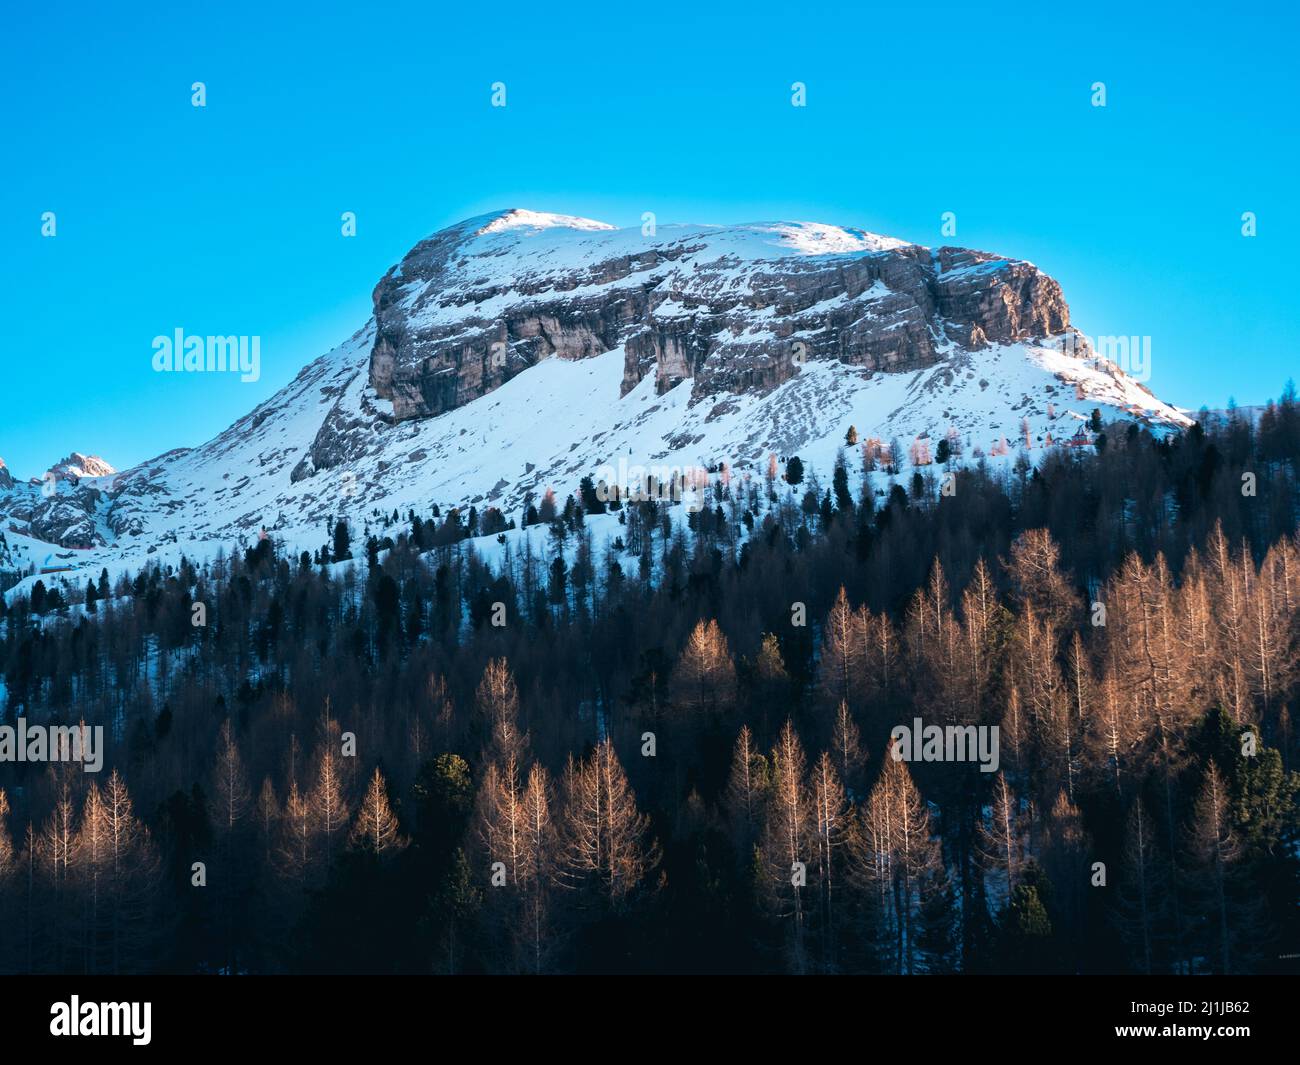 Punta Croda Negra Mountain Nuvolau Group oder Cinque Torri Region der Dolomiten, Italien Stockfoto